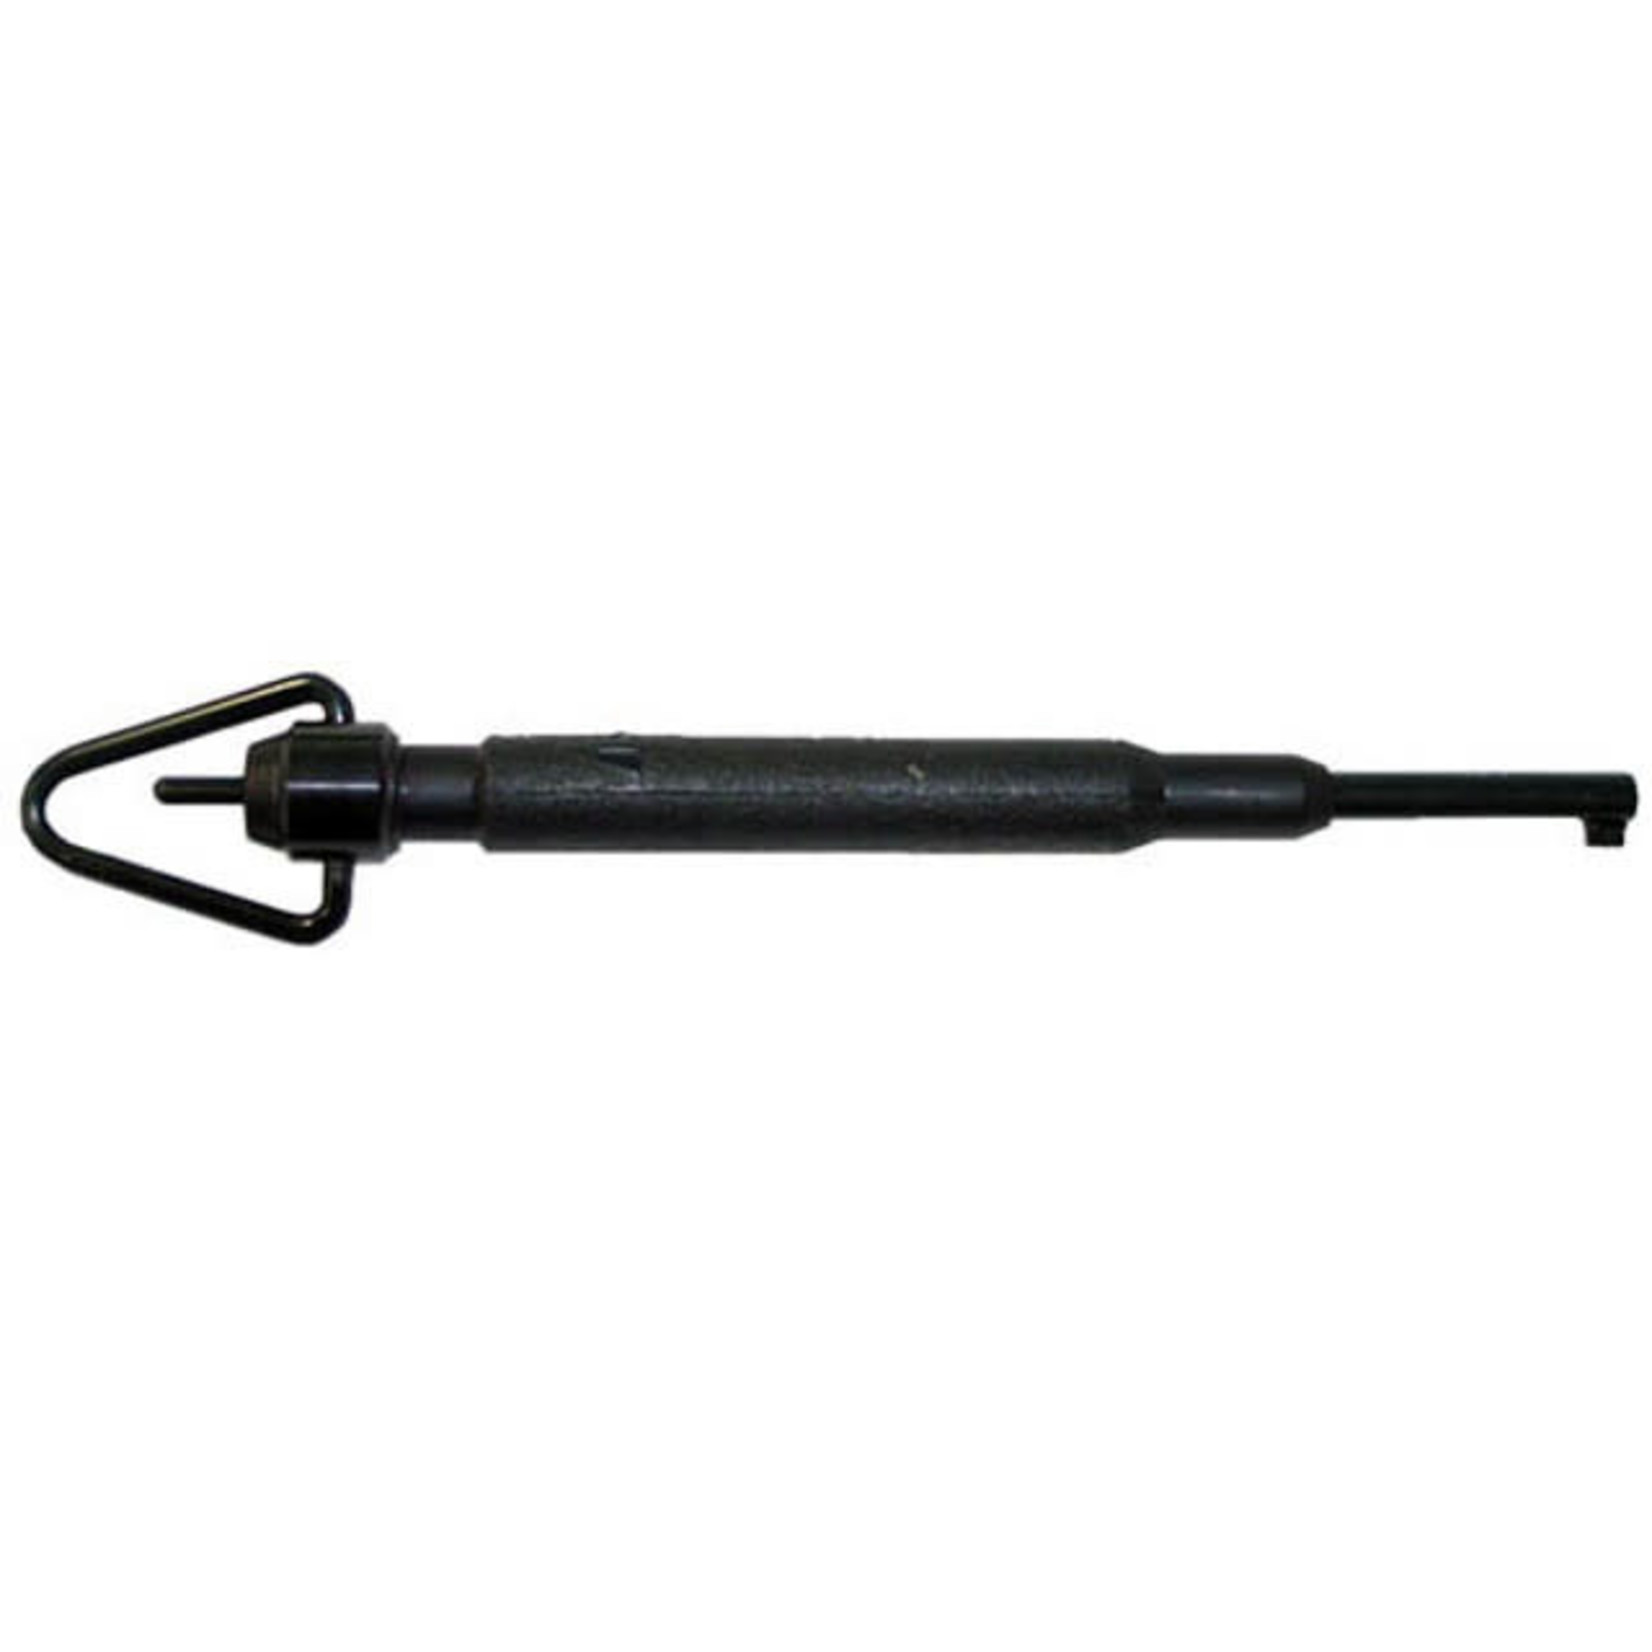 ASP Swivel Handcuff Key (Overmolded), Black